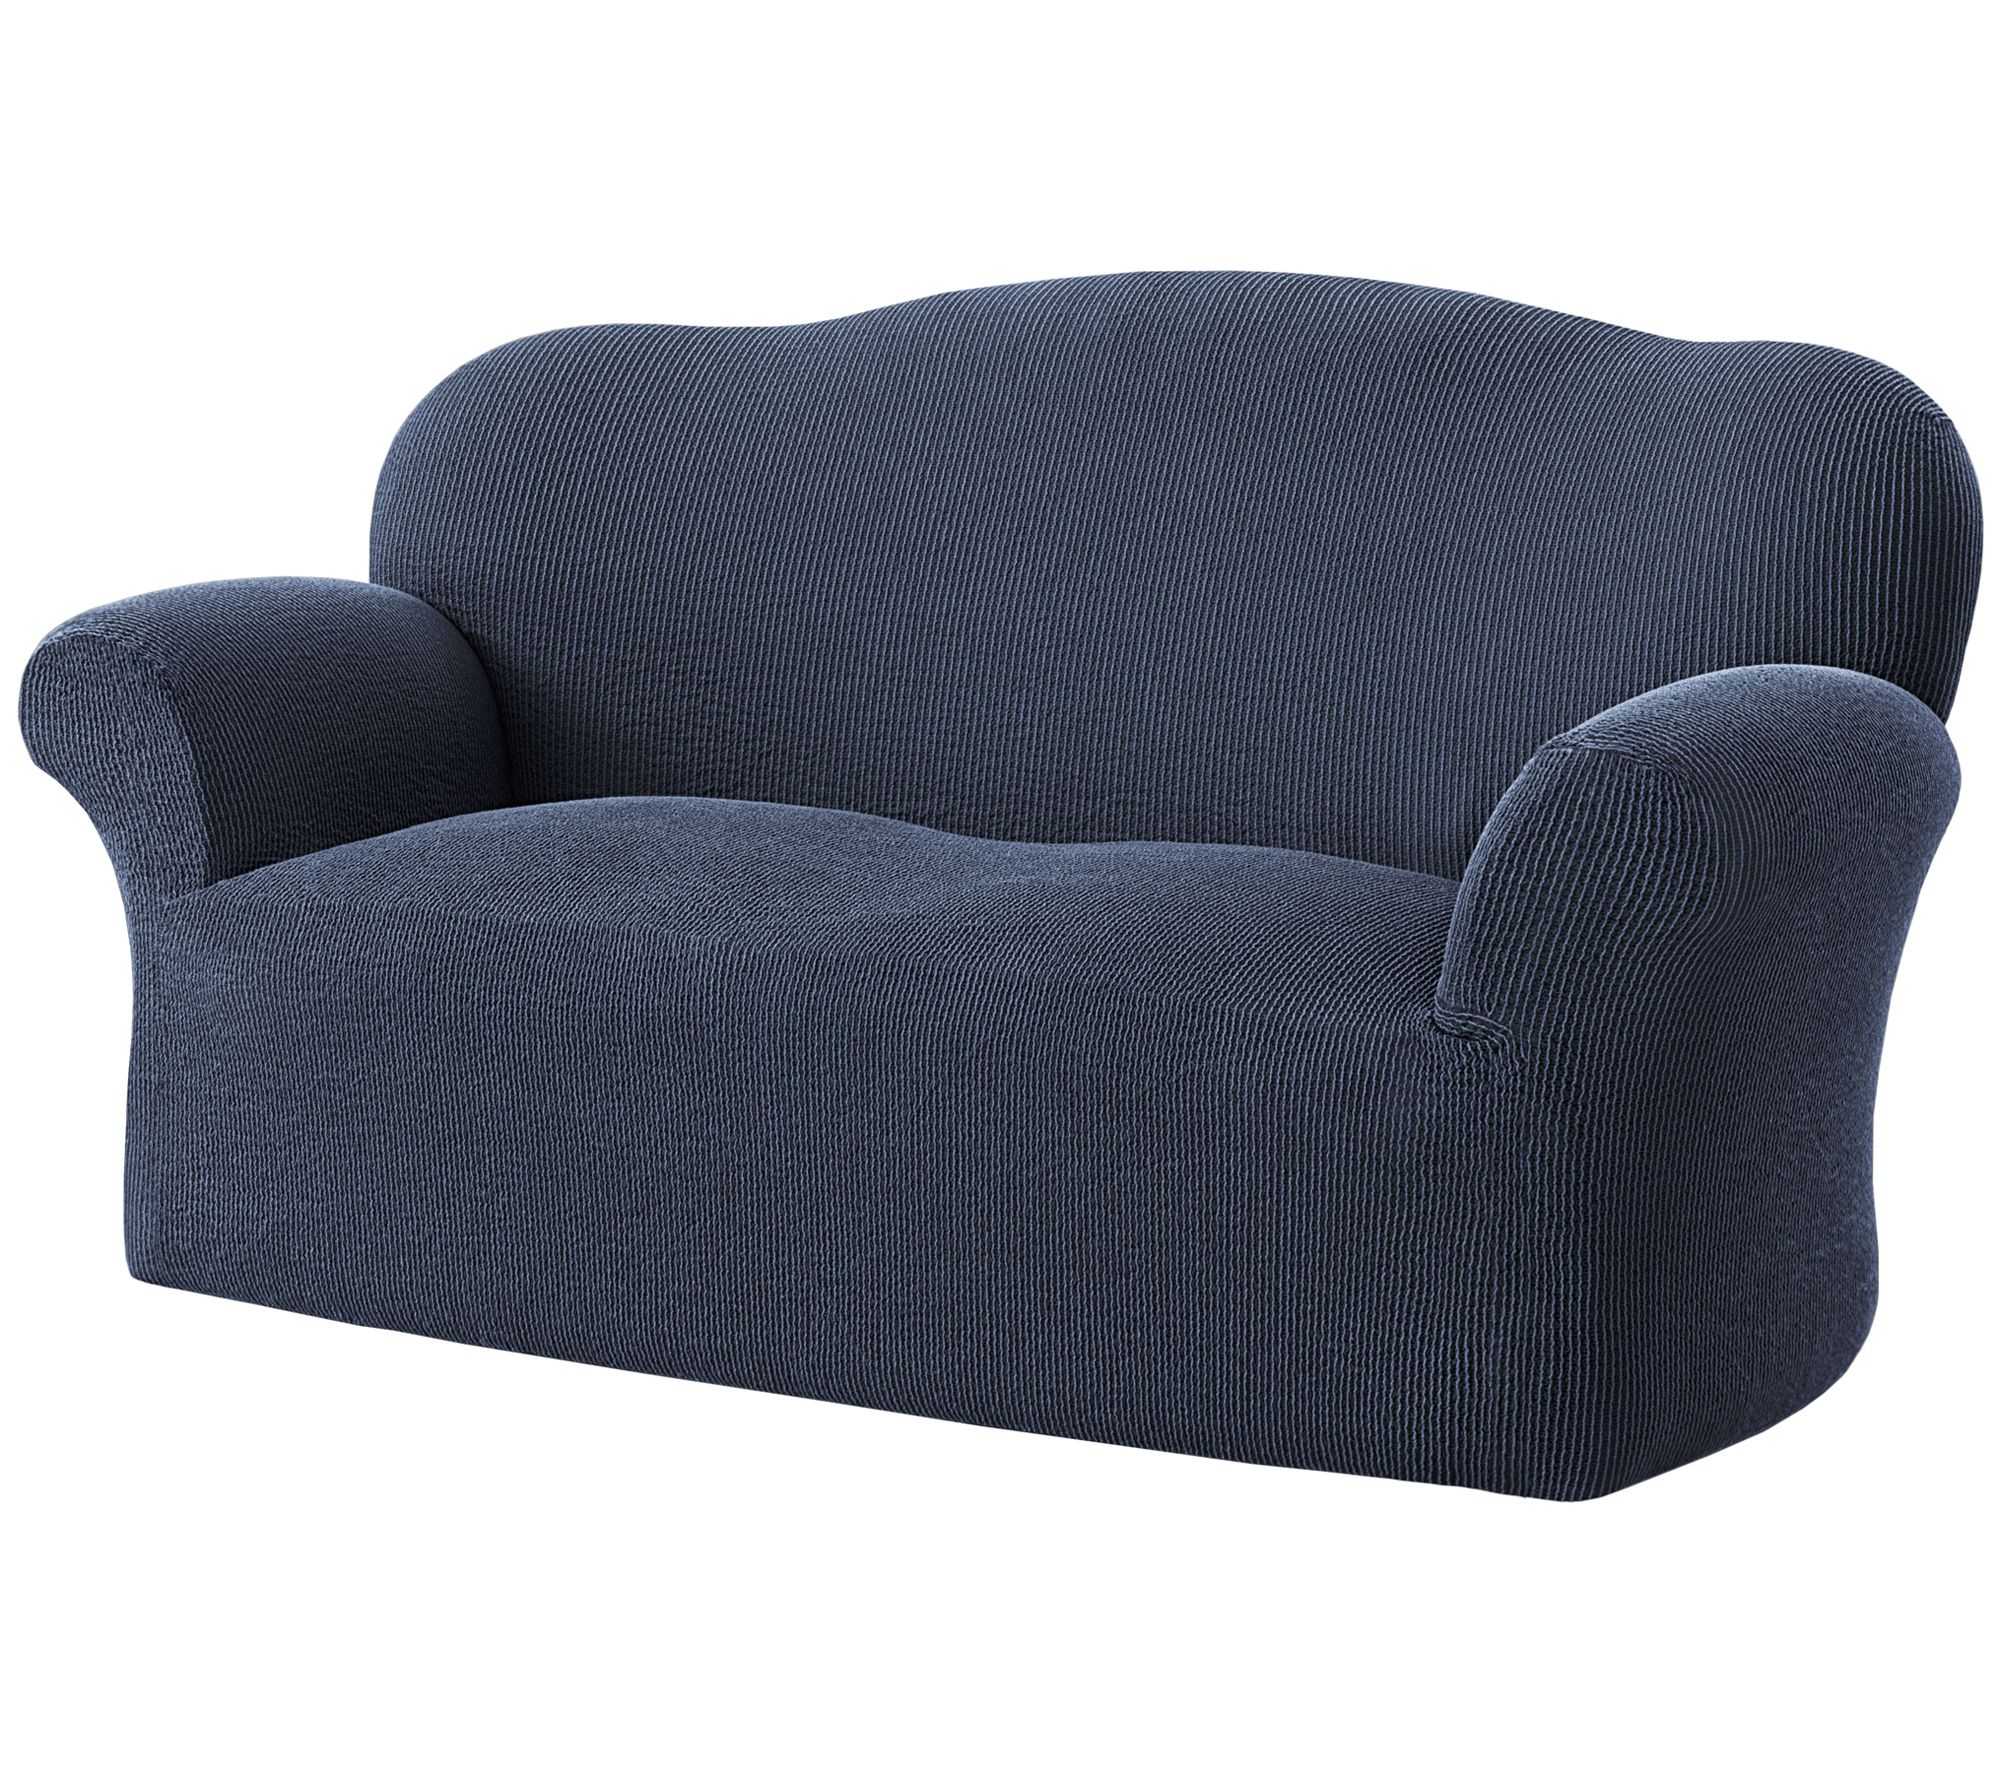 Paulato Gaico Pattern Cover Furniture by Velluto 2-Seater